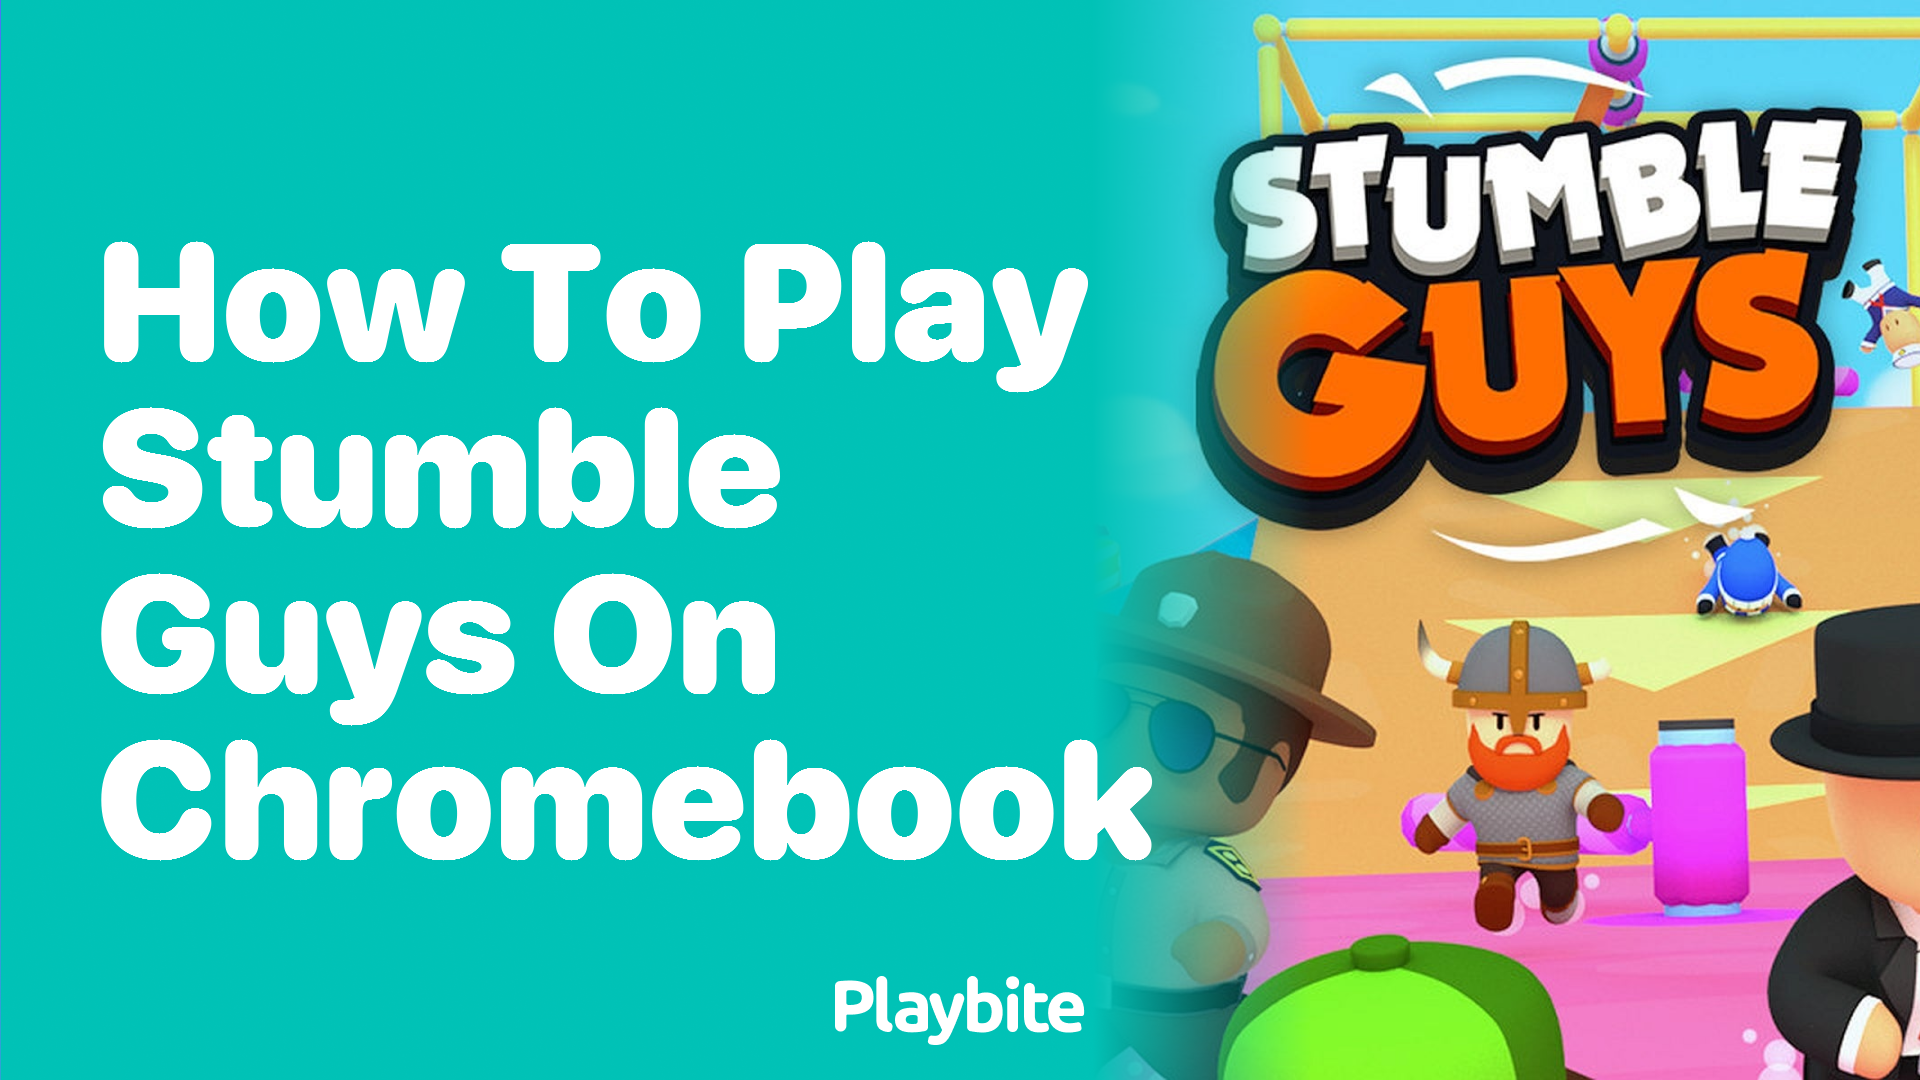 How to Play Stumble Guys on Chromebook